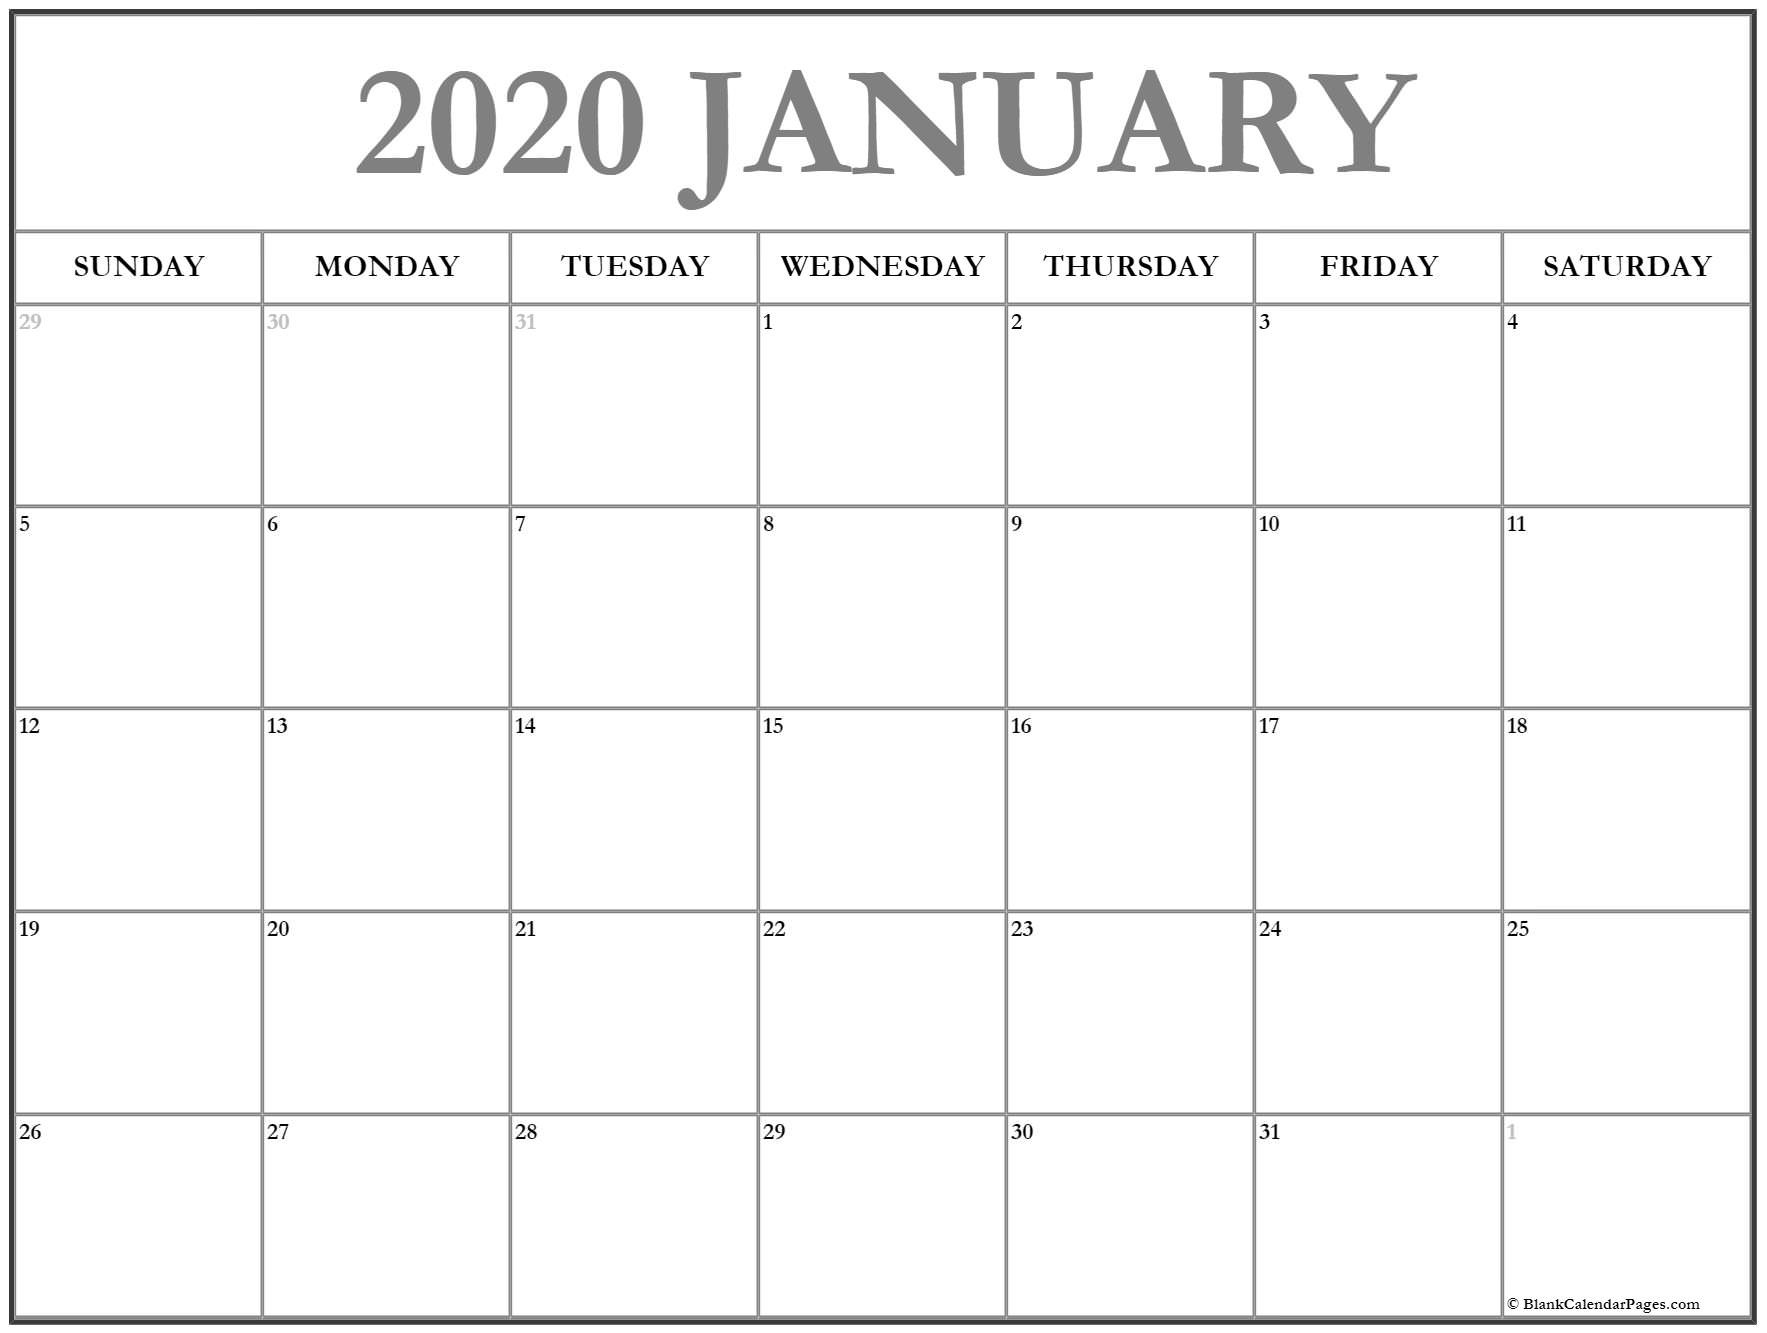 January 2020 Calendar | Free Printable Monthly Calendars-Free Printable January 2020 Calendar